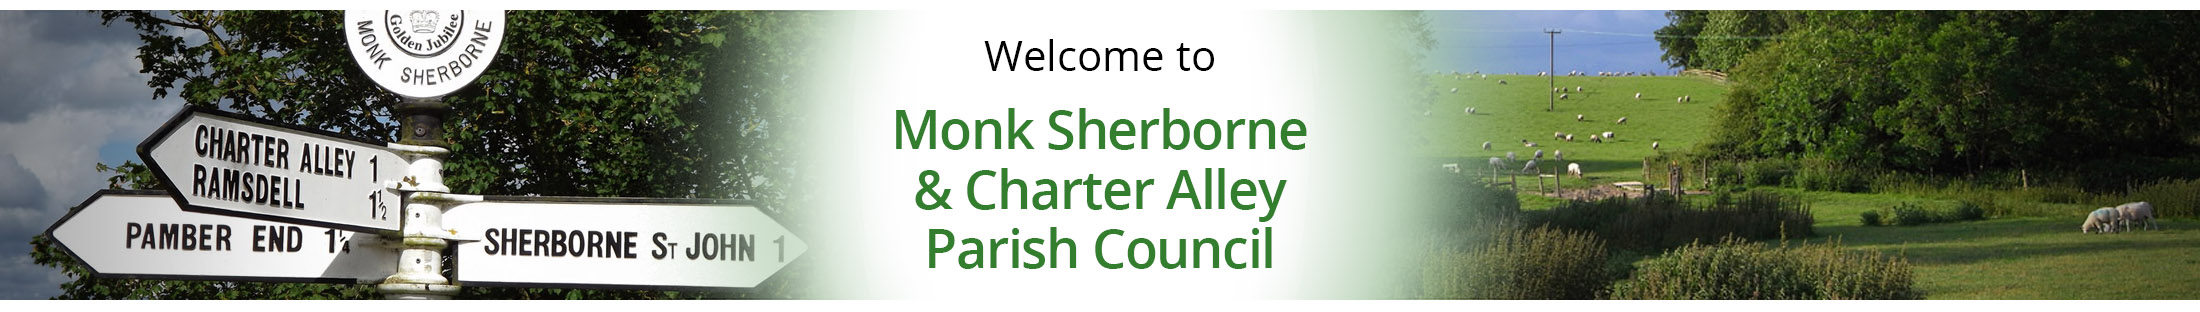 Header Image for Monk Sherborne Parish Council